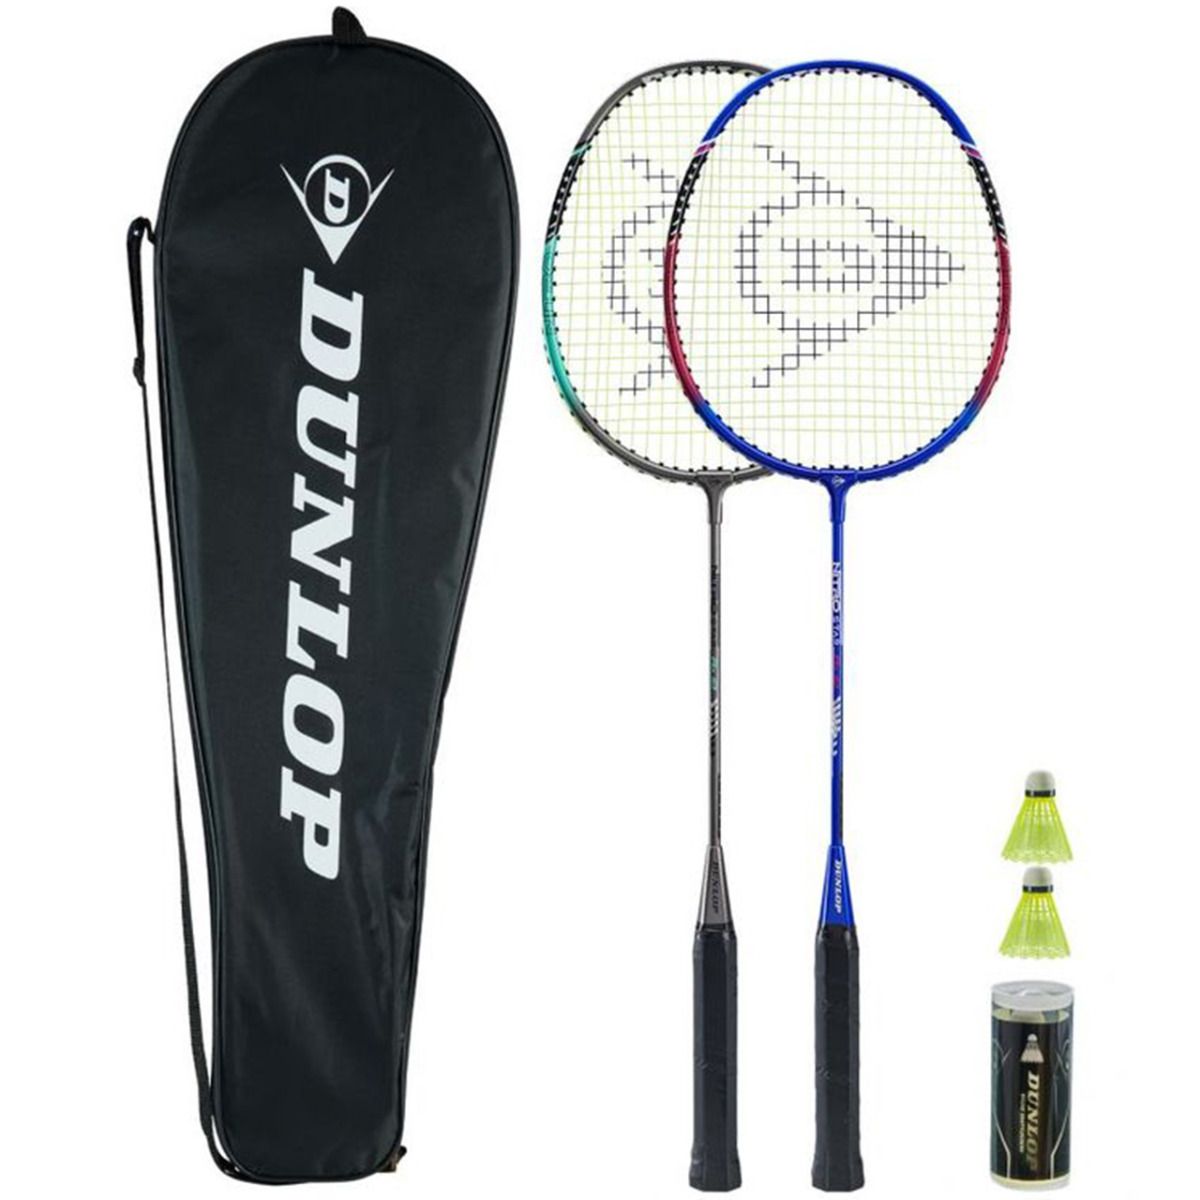 Dunlop Zestaw do badmintona Nitro Star 2 13015197